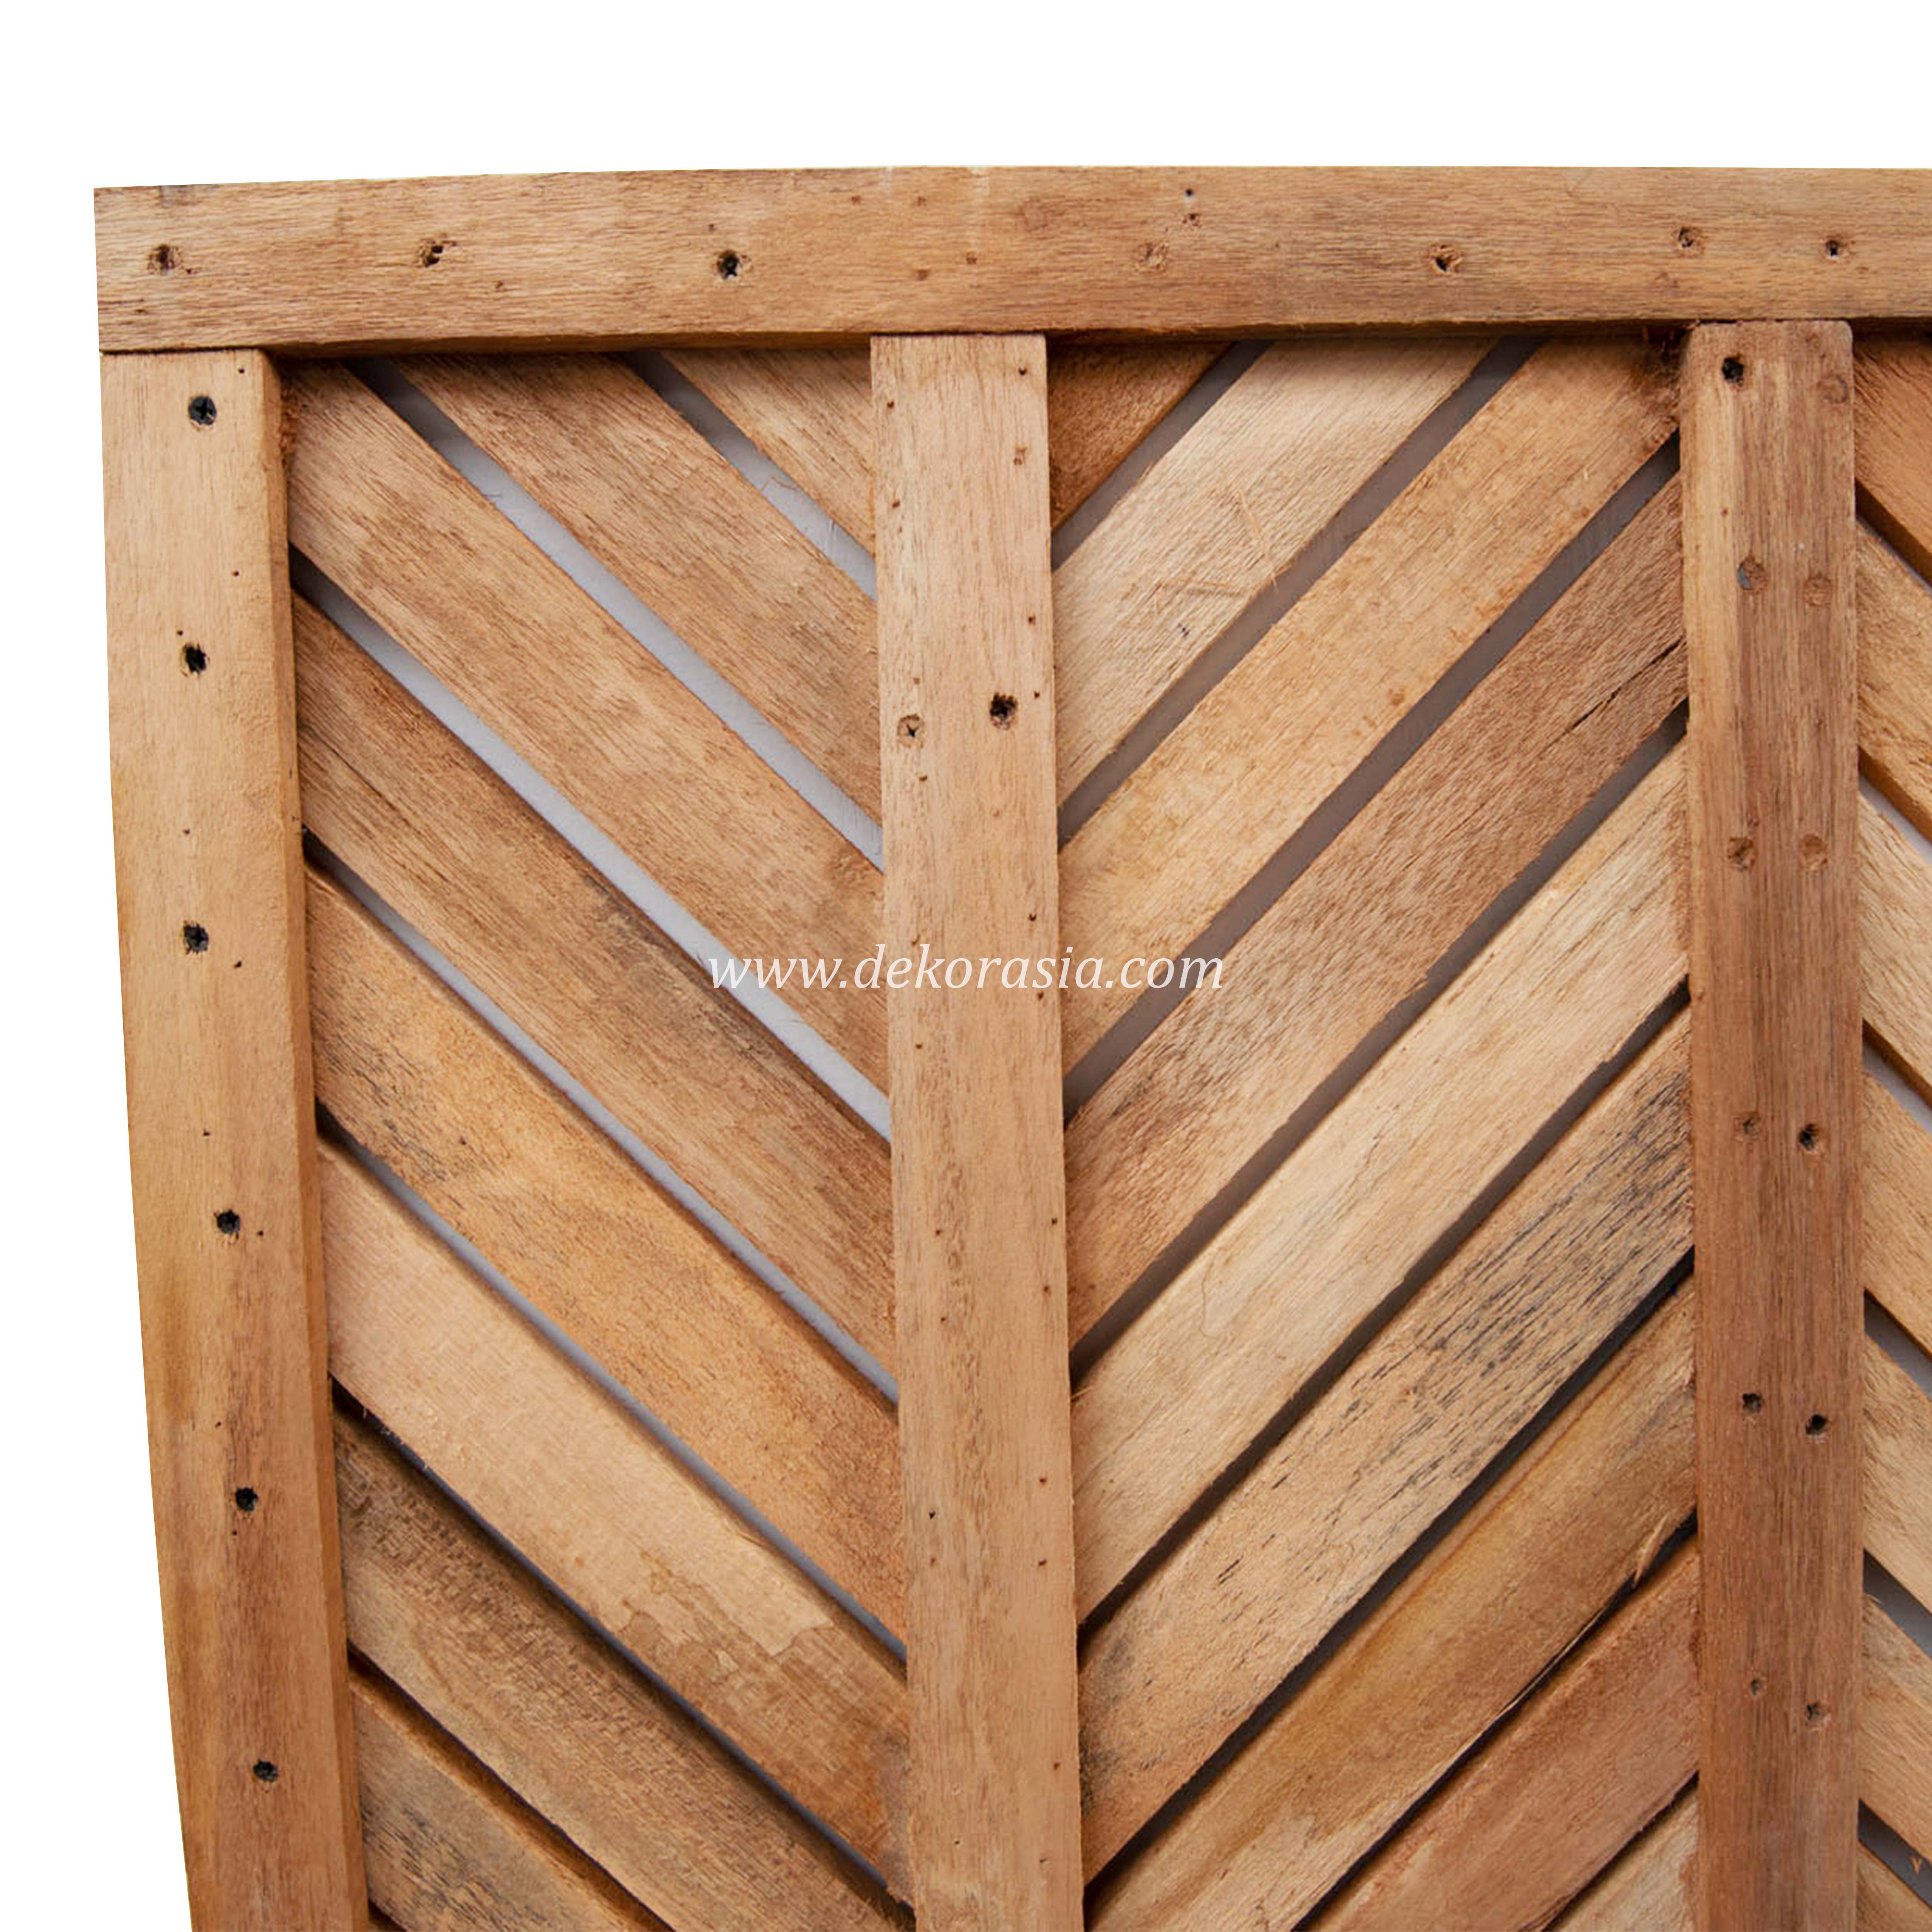 Wooden Screen Spider Pattern Design, Wood Panels Wood Screen Variation Pattern (Dipterocarpus kunstleri)